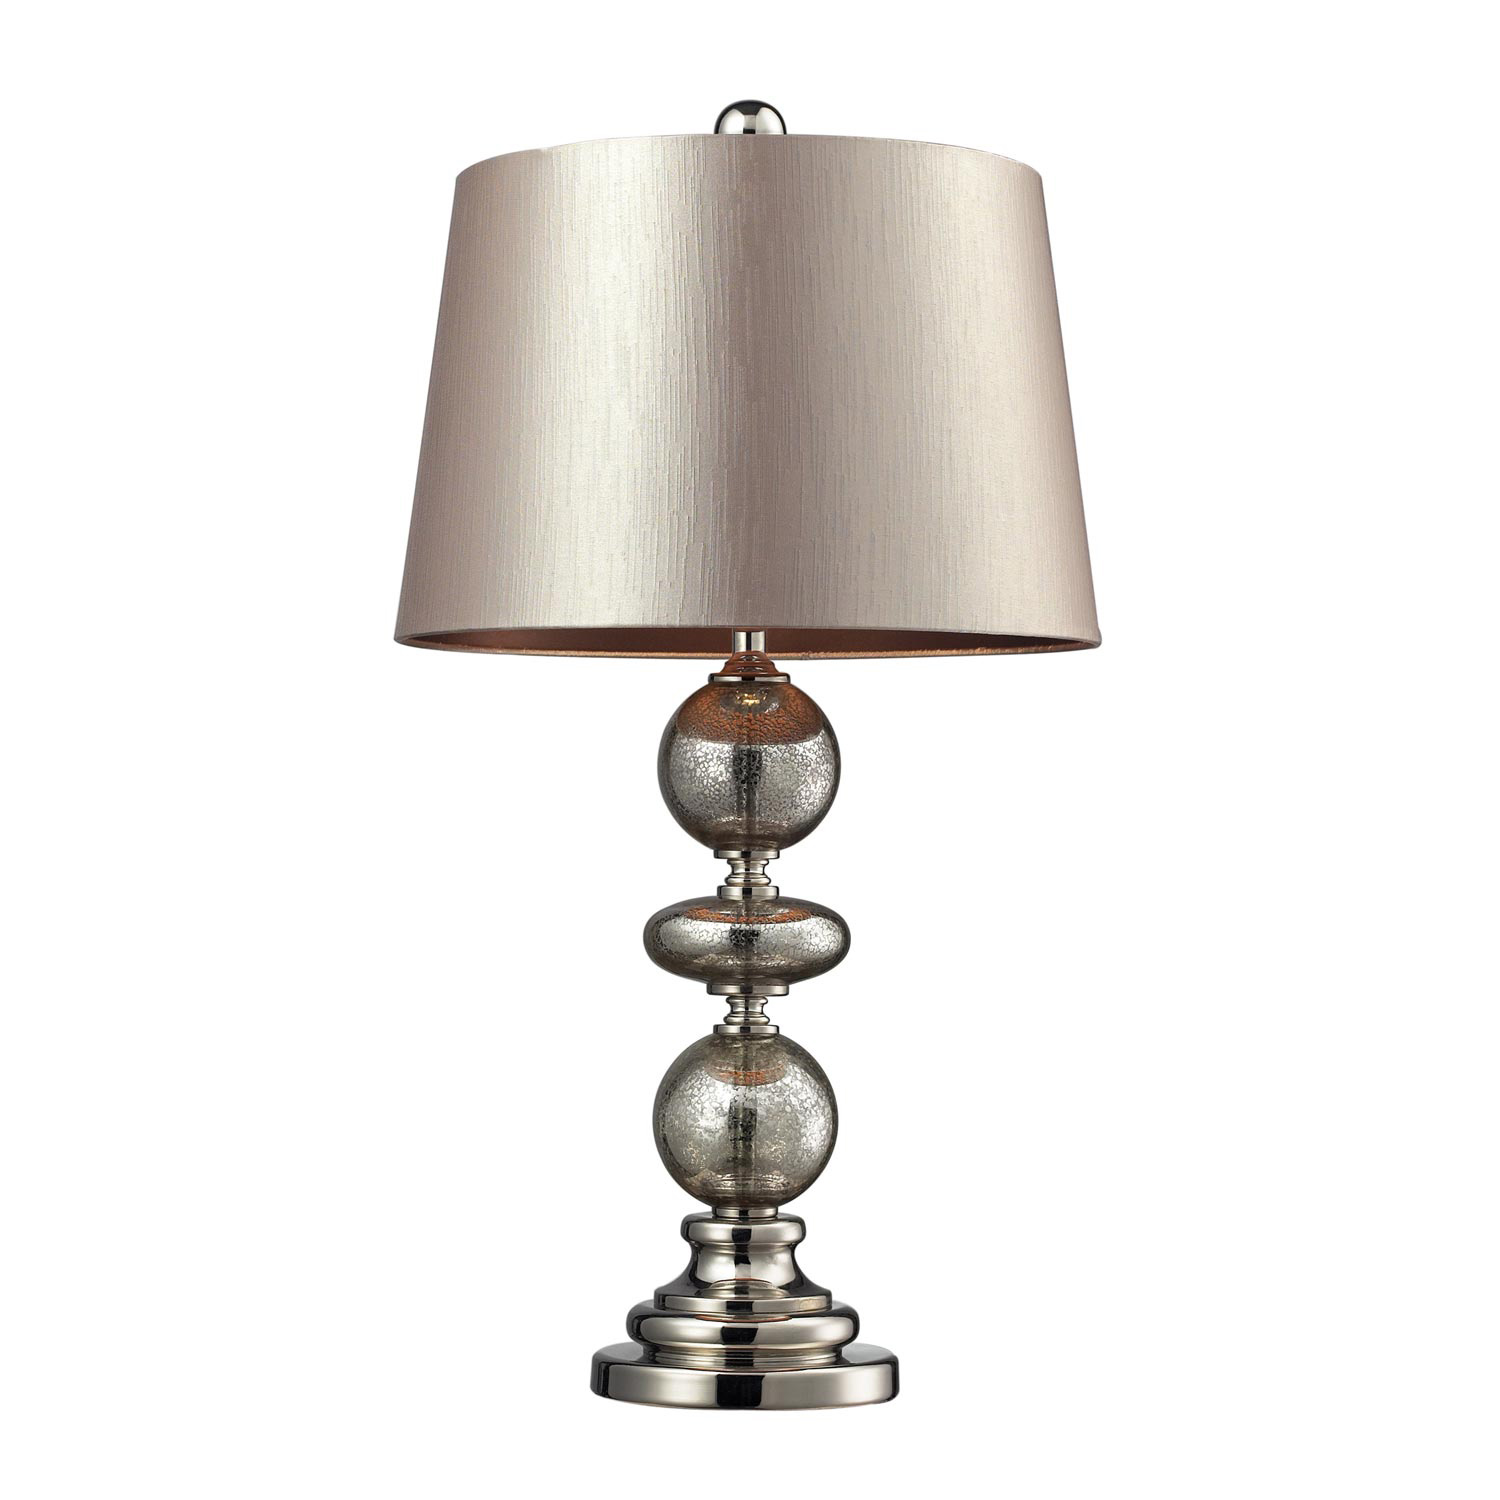 Elk Lighting D2227 Hollis Table Lamp - Antique Mercury Glass and Polished Nickle